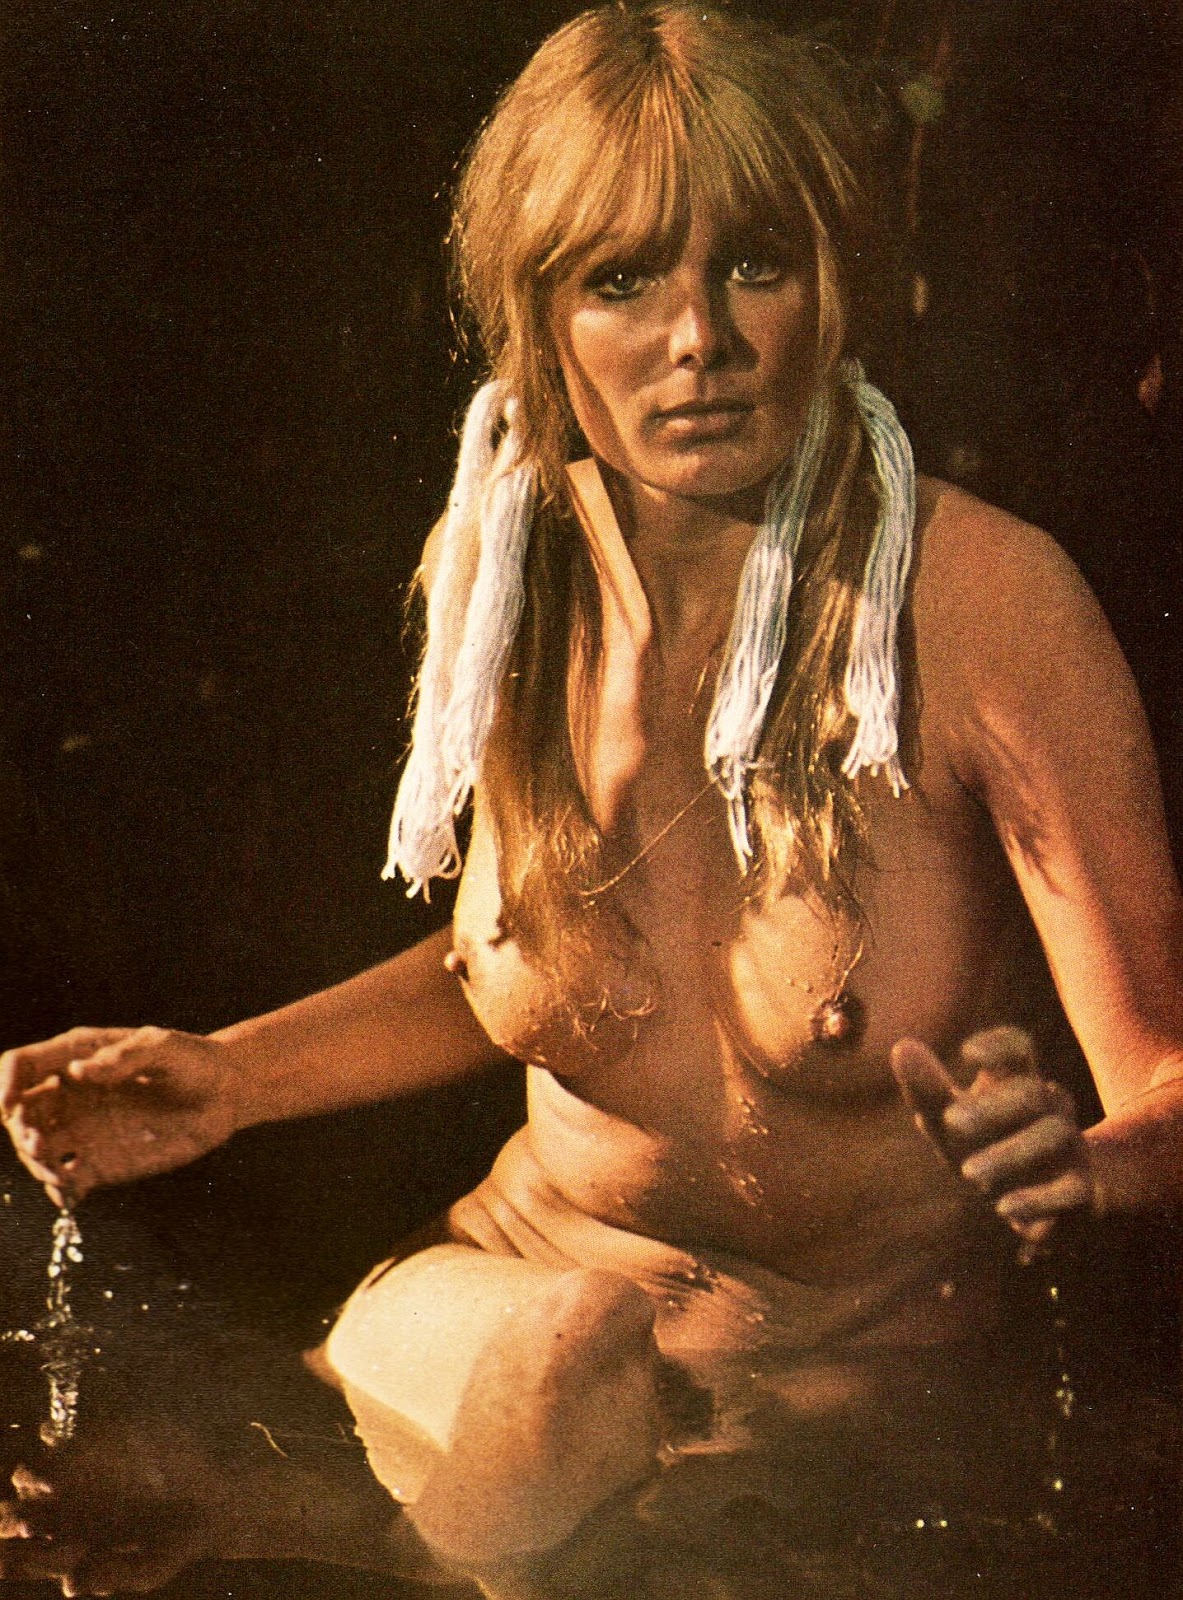 Linda evans in the nude